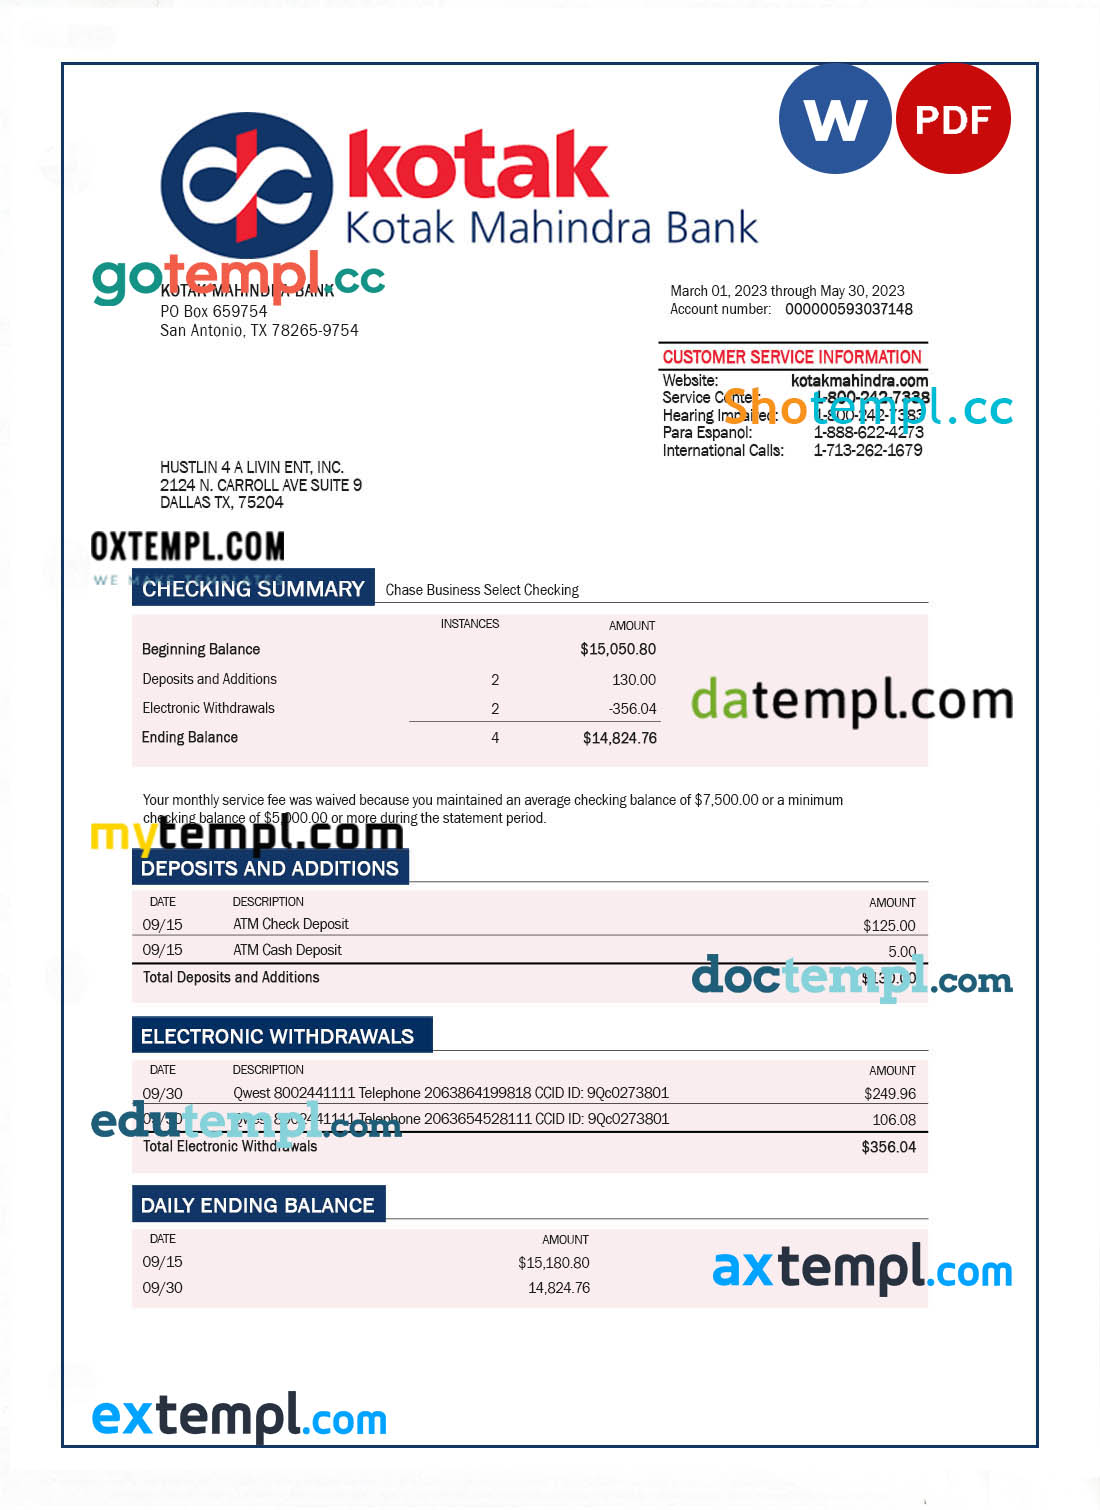 Kotak Mahindra Bank enterprise statement Word and PDF template